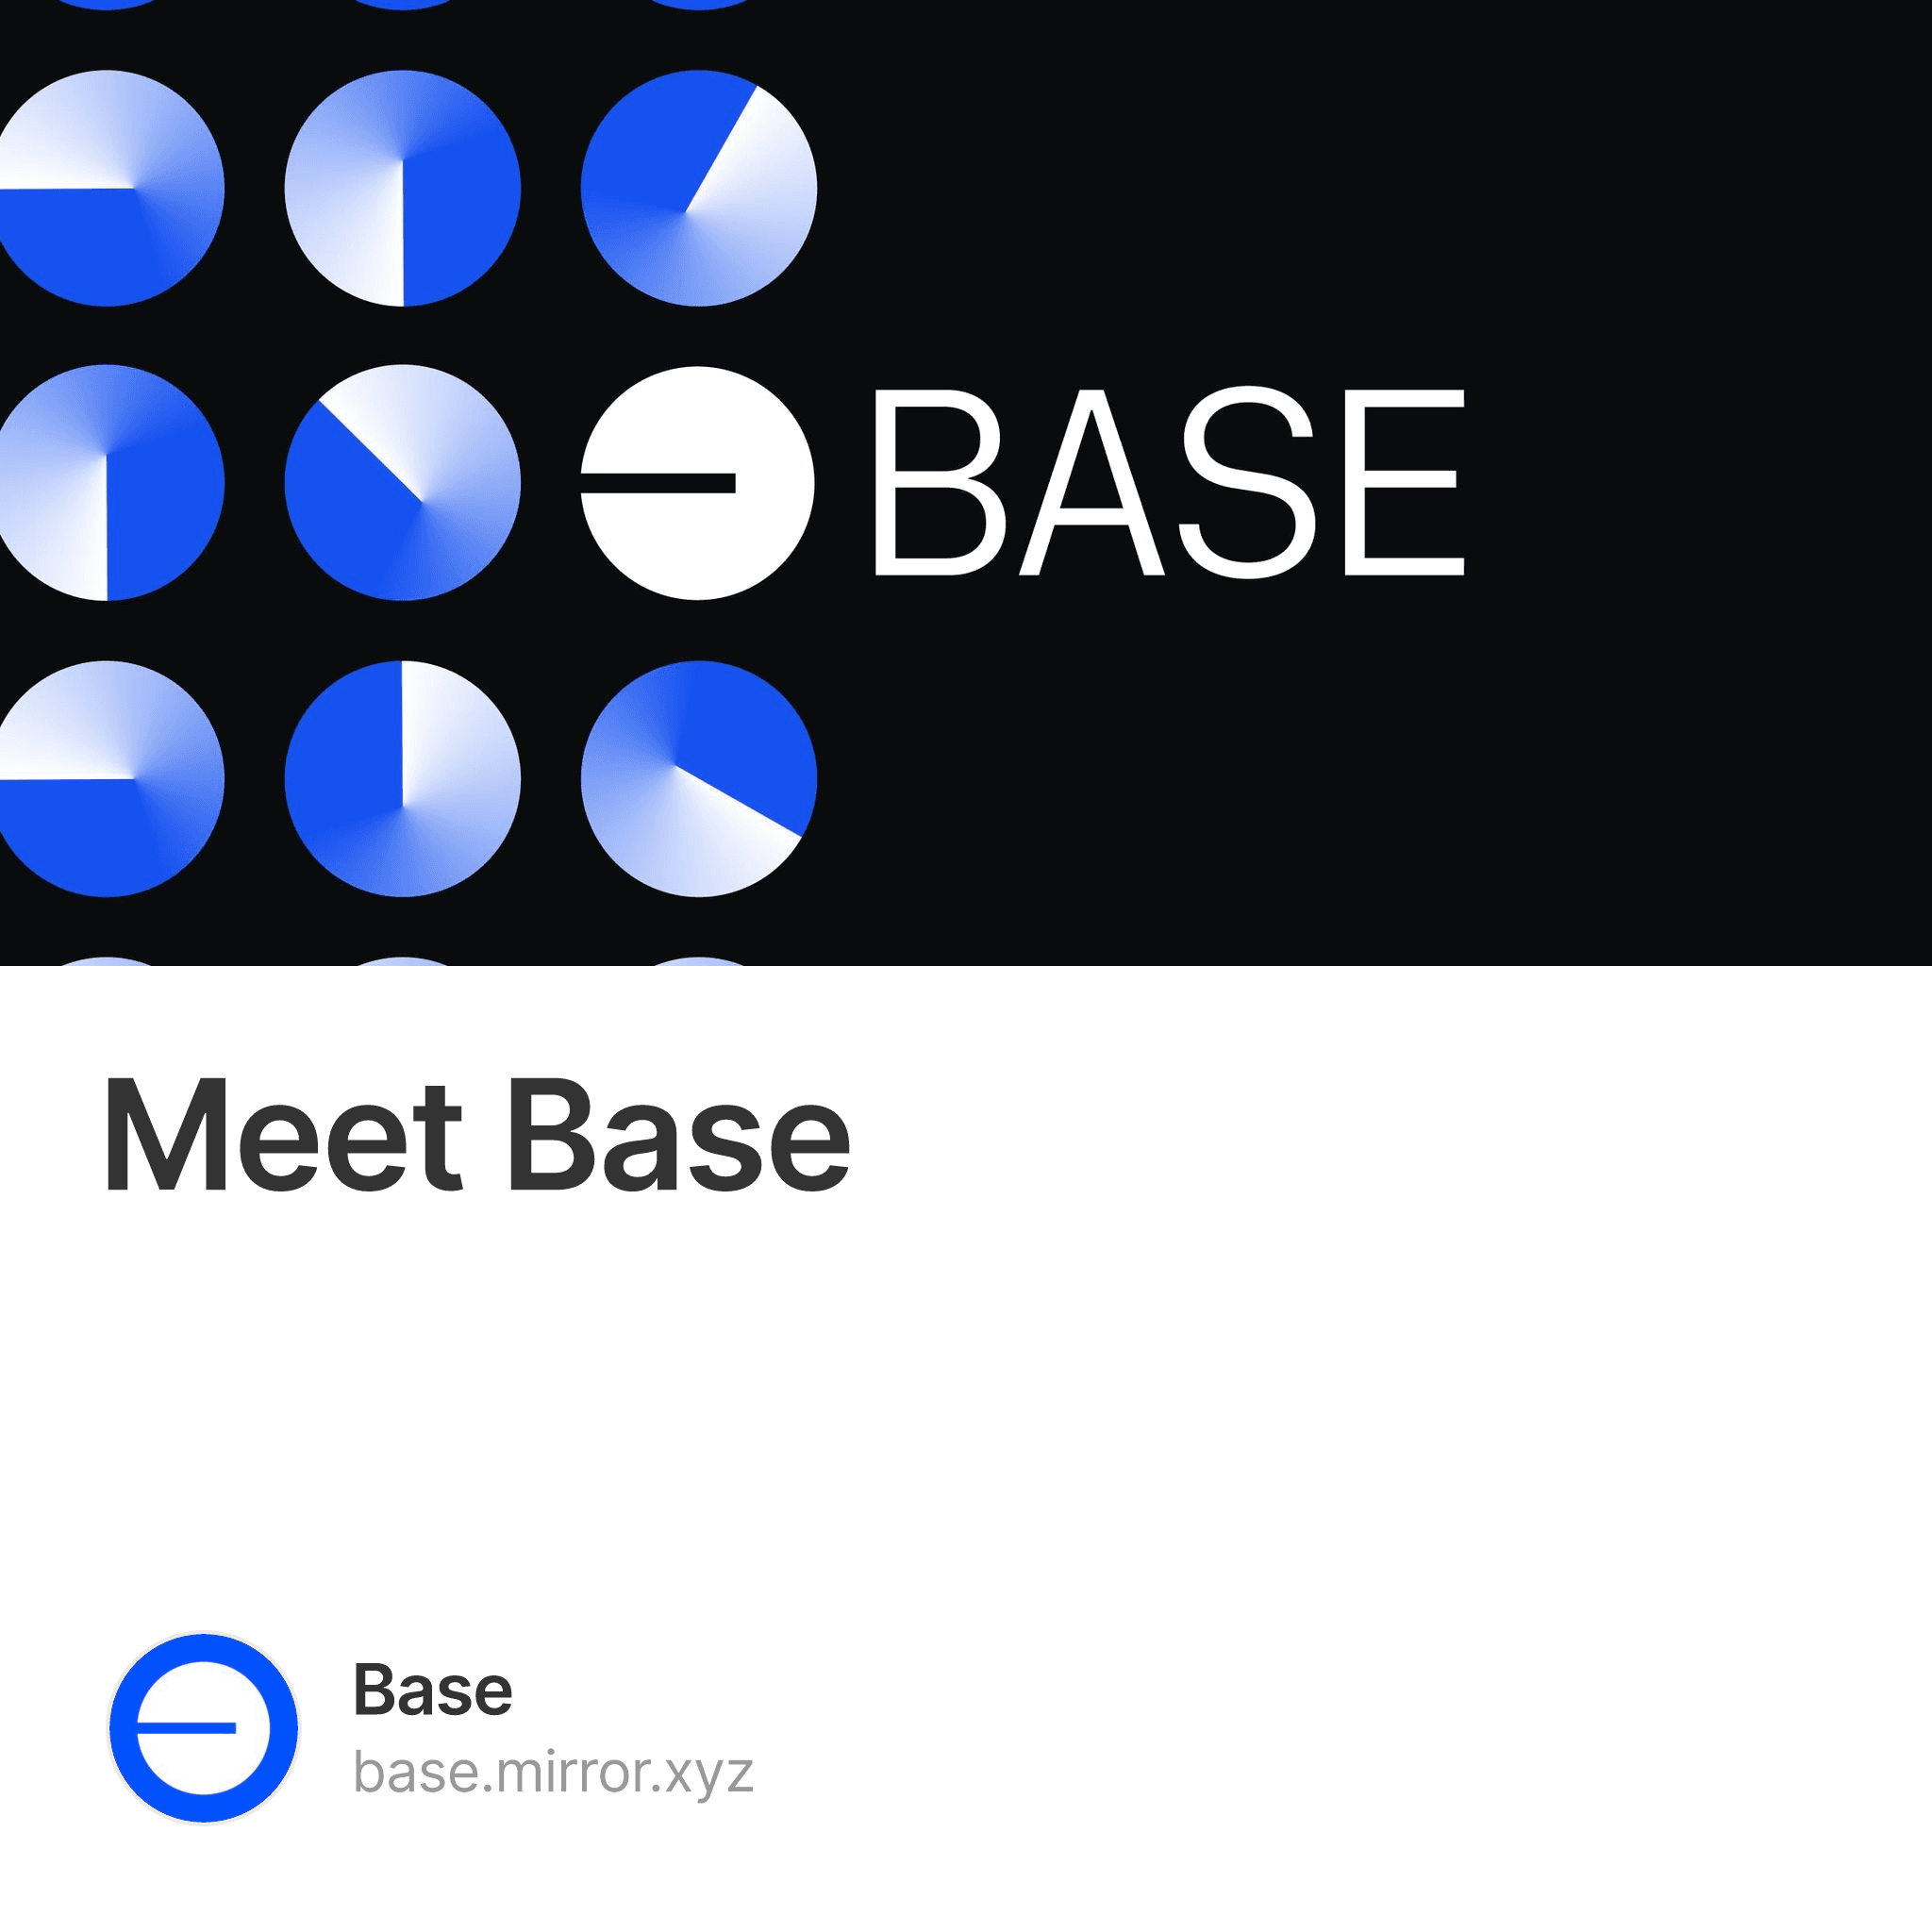 Meet Base 88/500